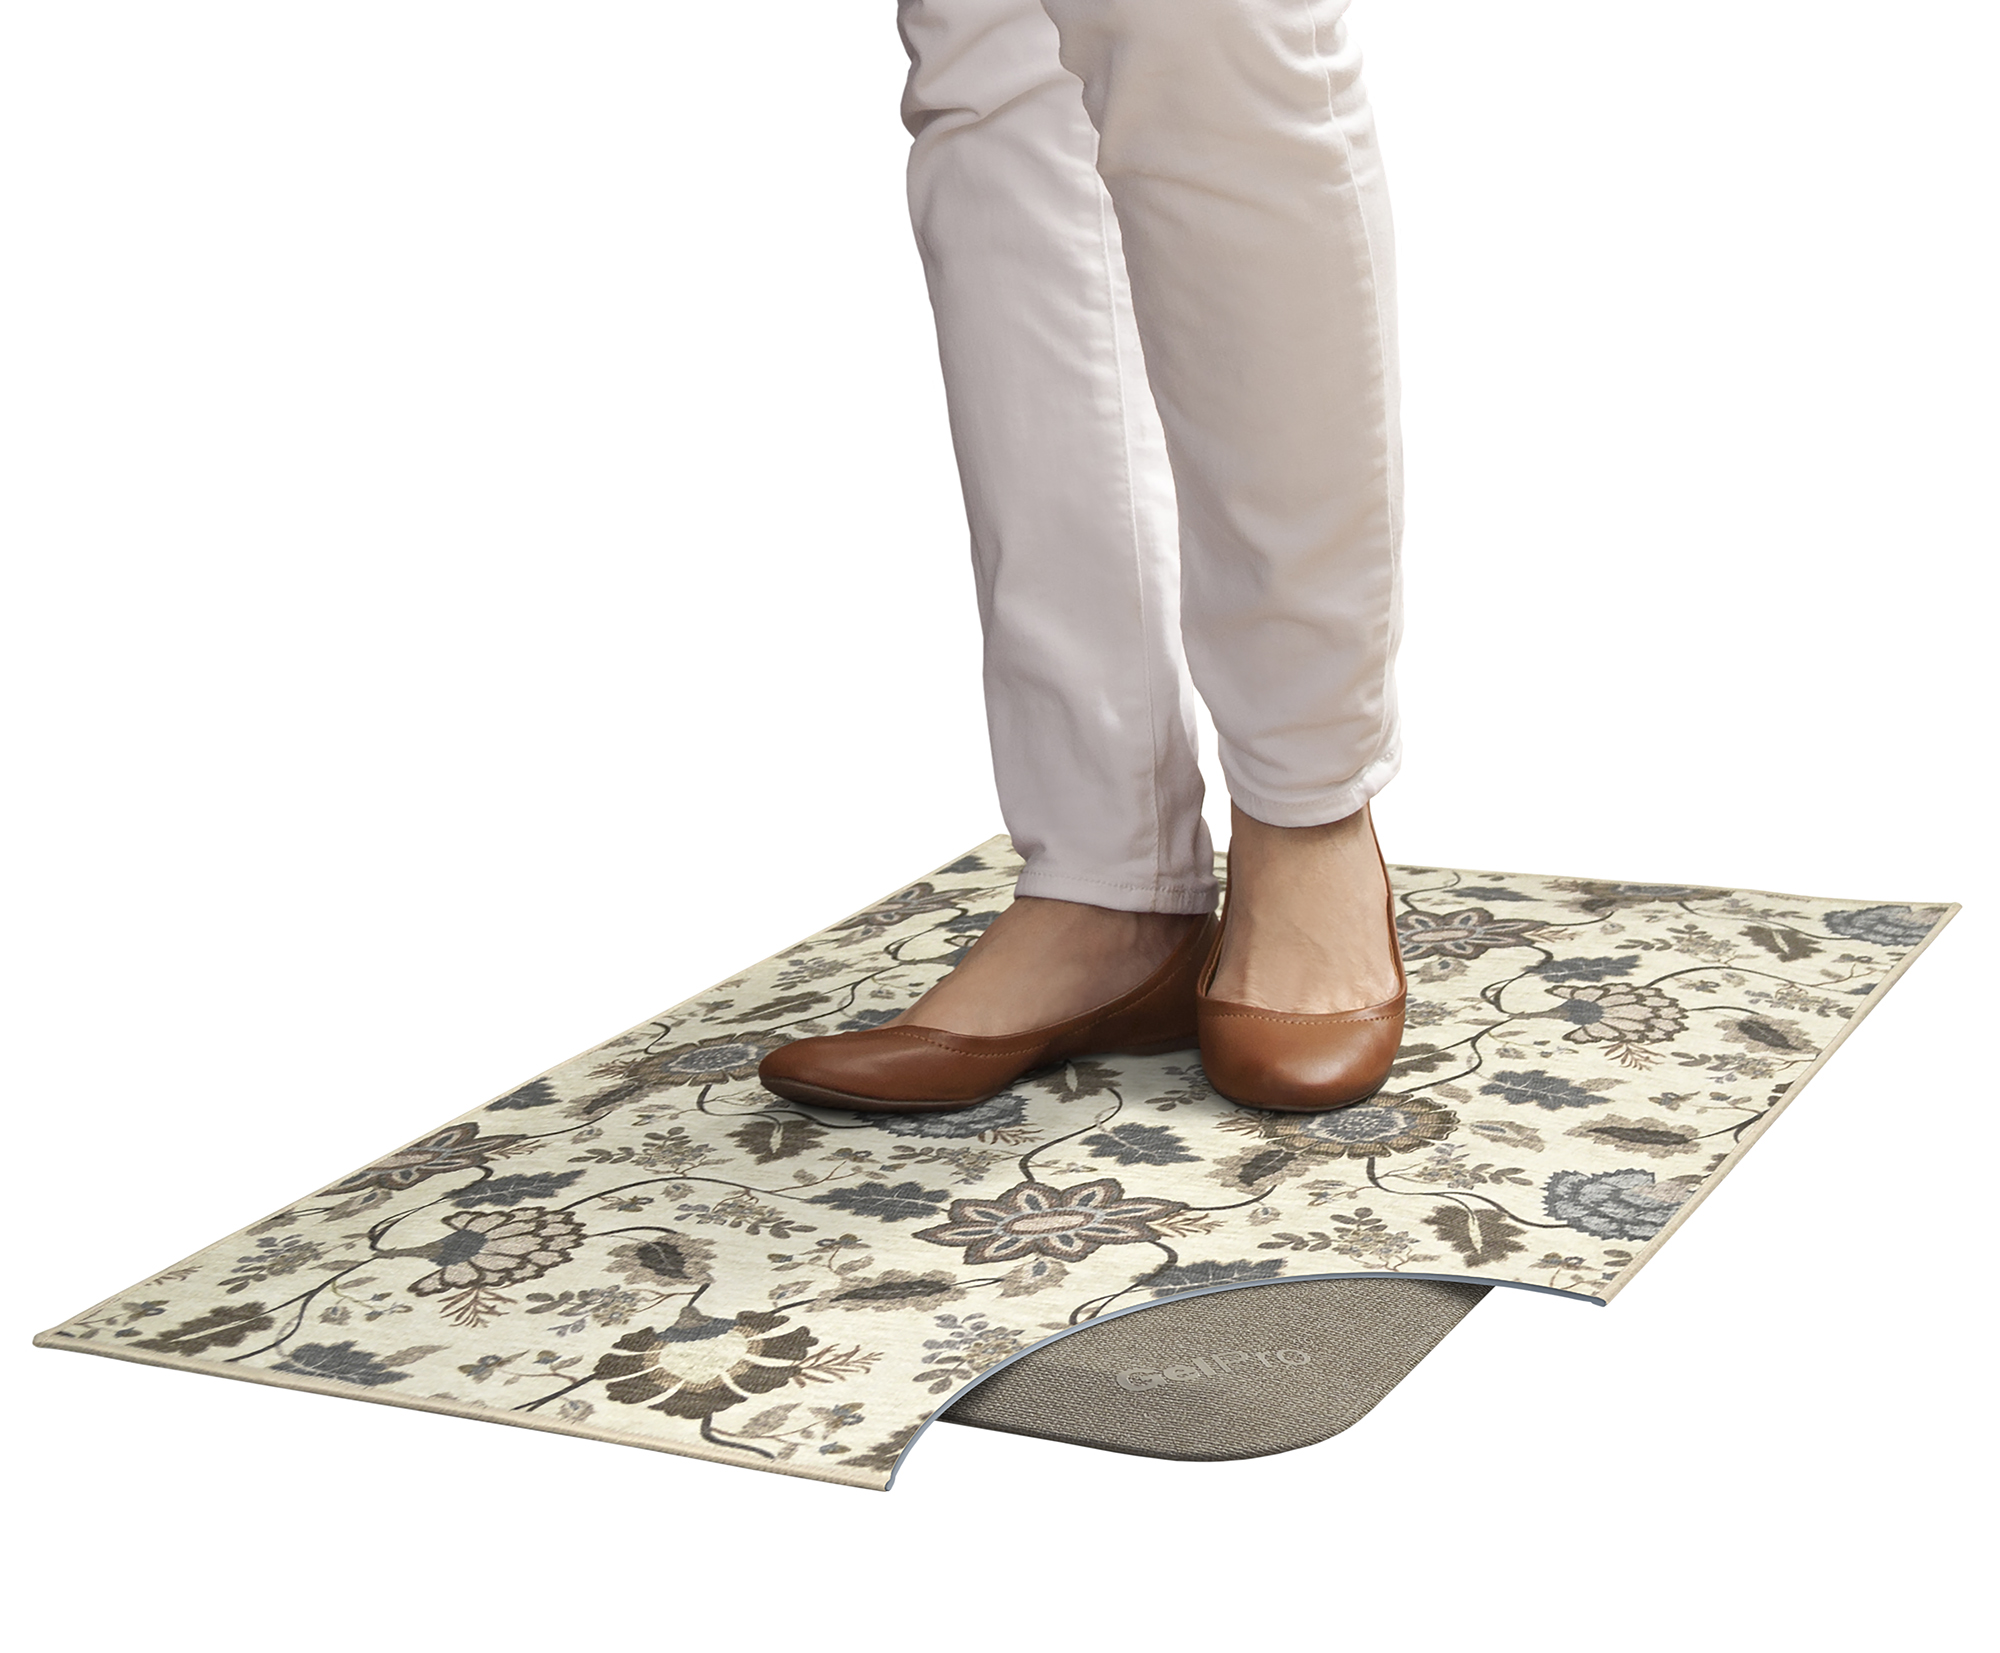 Ergo Comfort Rug by GelPro combines a designer rug with a comfort mat